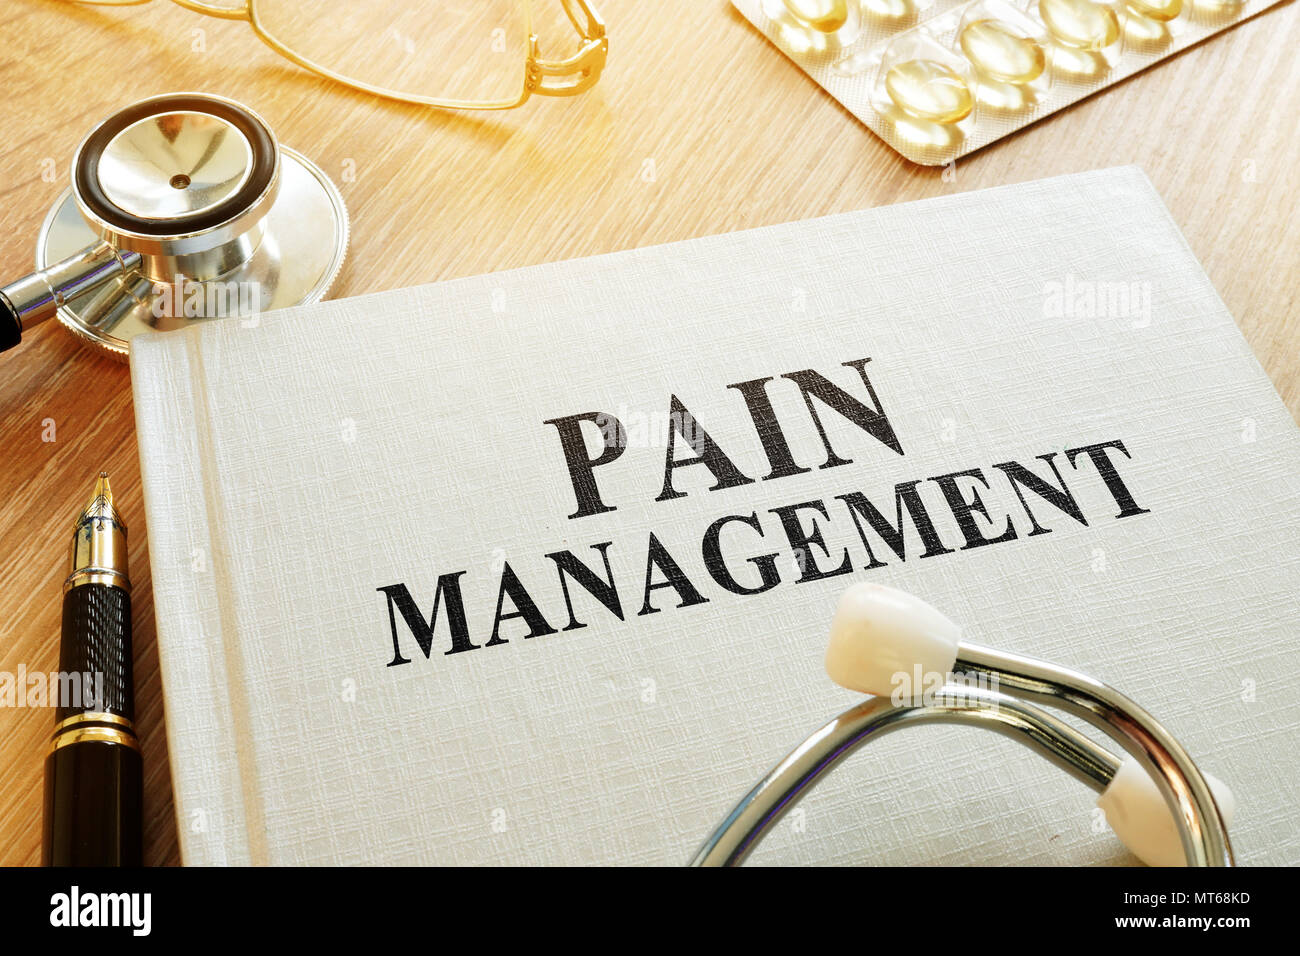 Book about Pain management. Chronic care management concept. Stock Photo